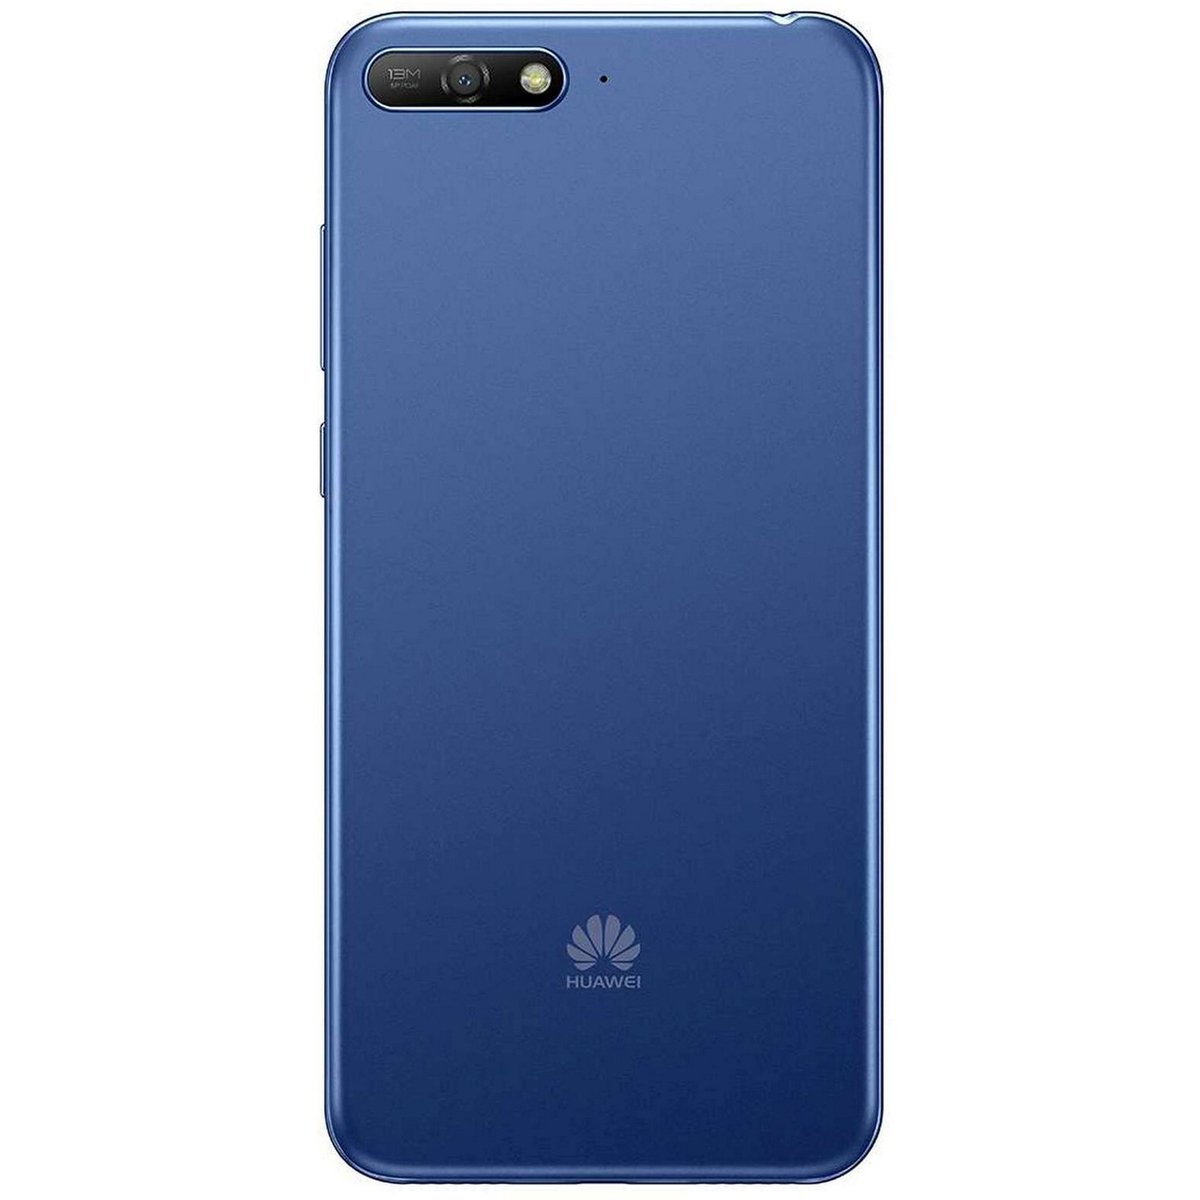 Huawei Y6 Prime 2018 16GB Blue